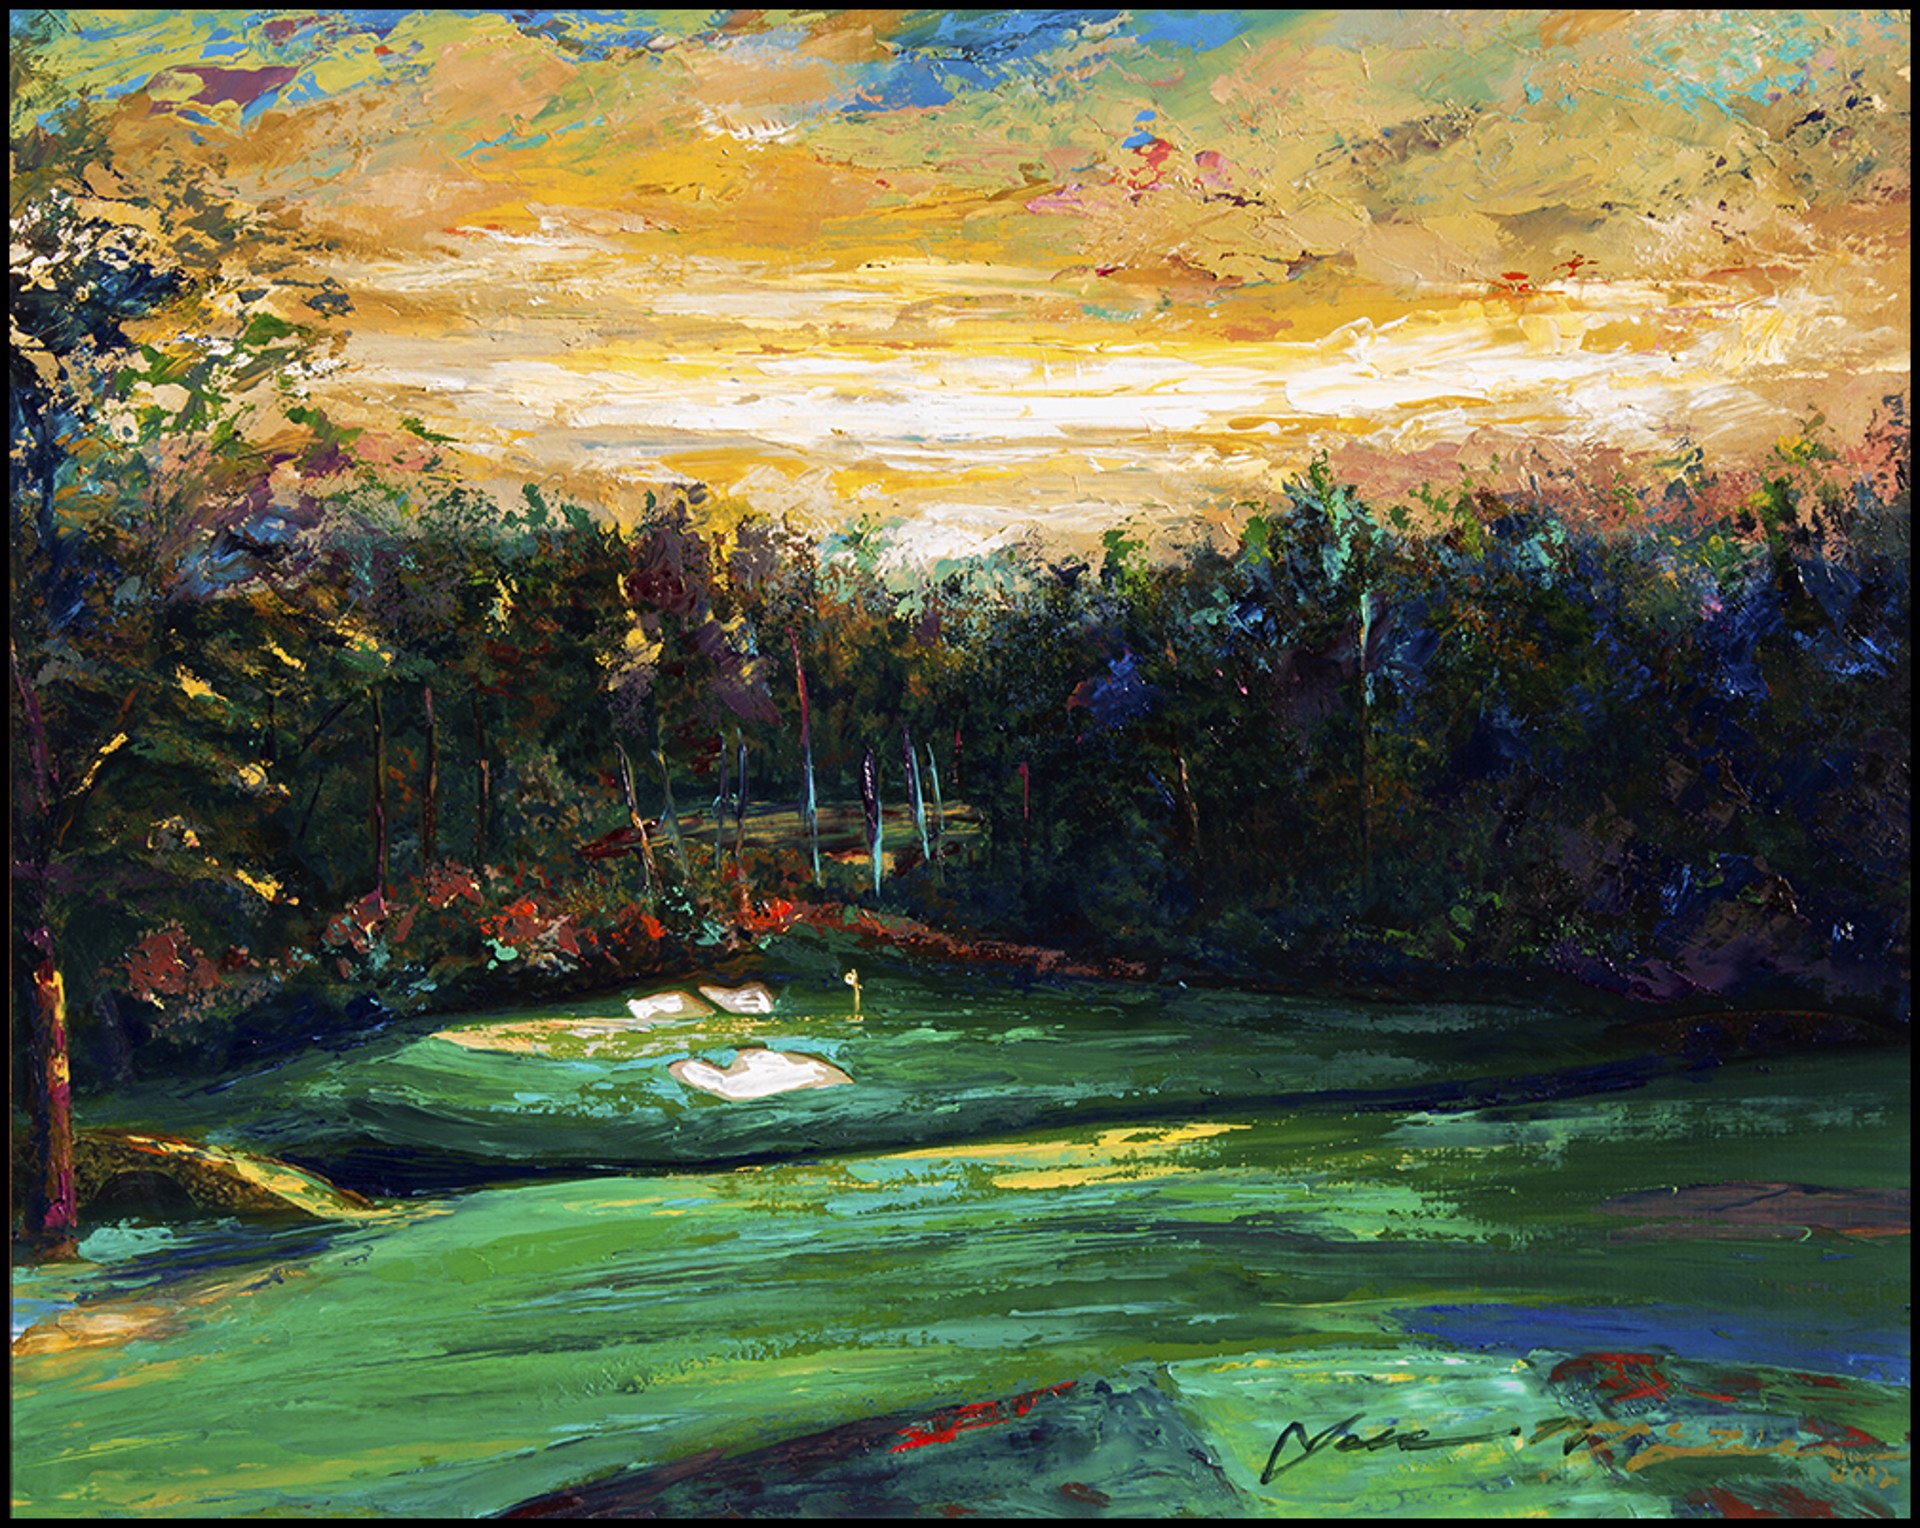 "Golden Sunset over the Golden Bell" - Augusta's #12 by Jace McTier